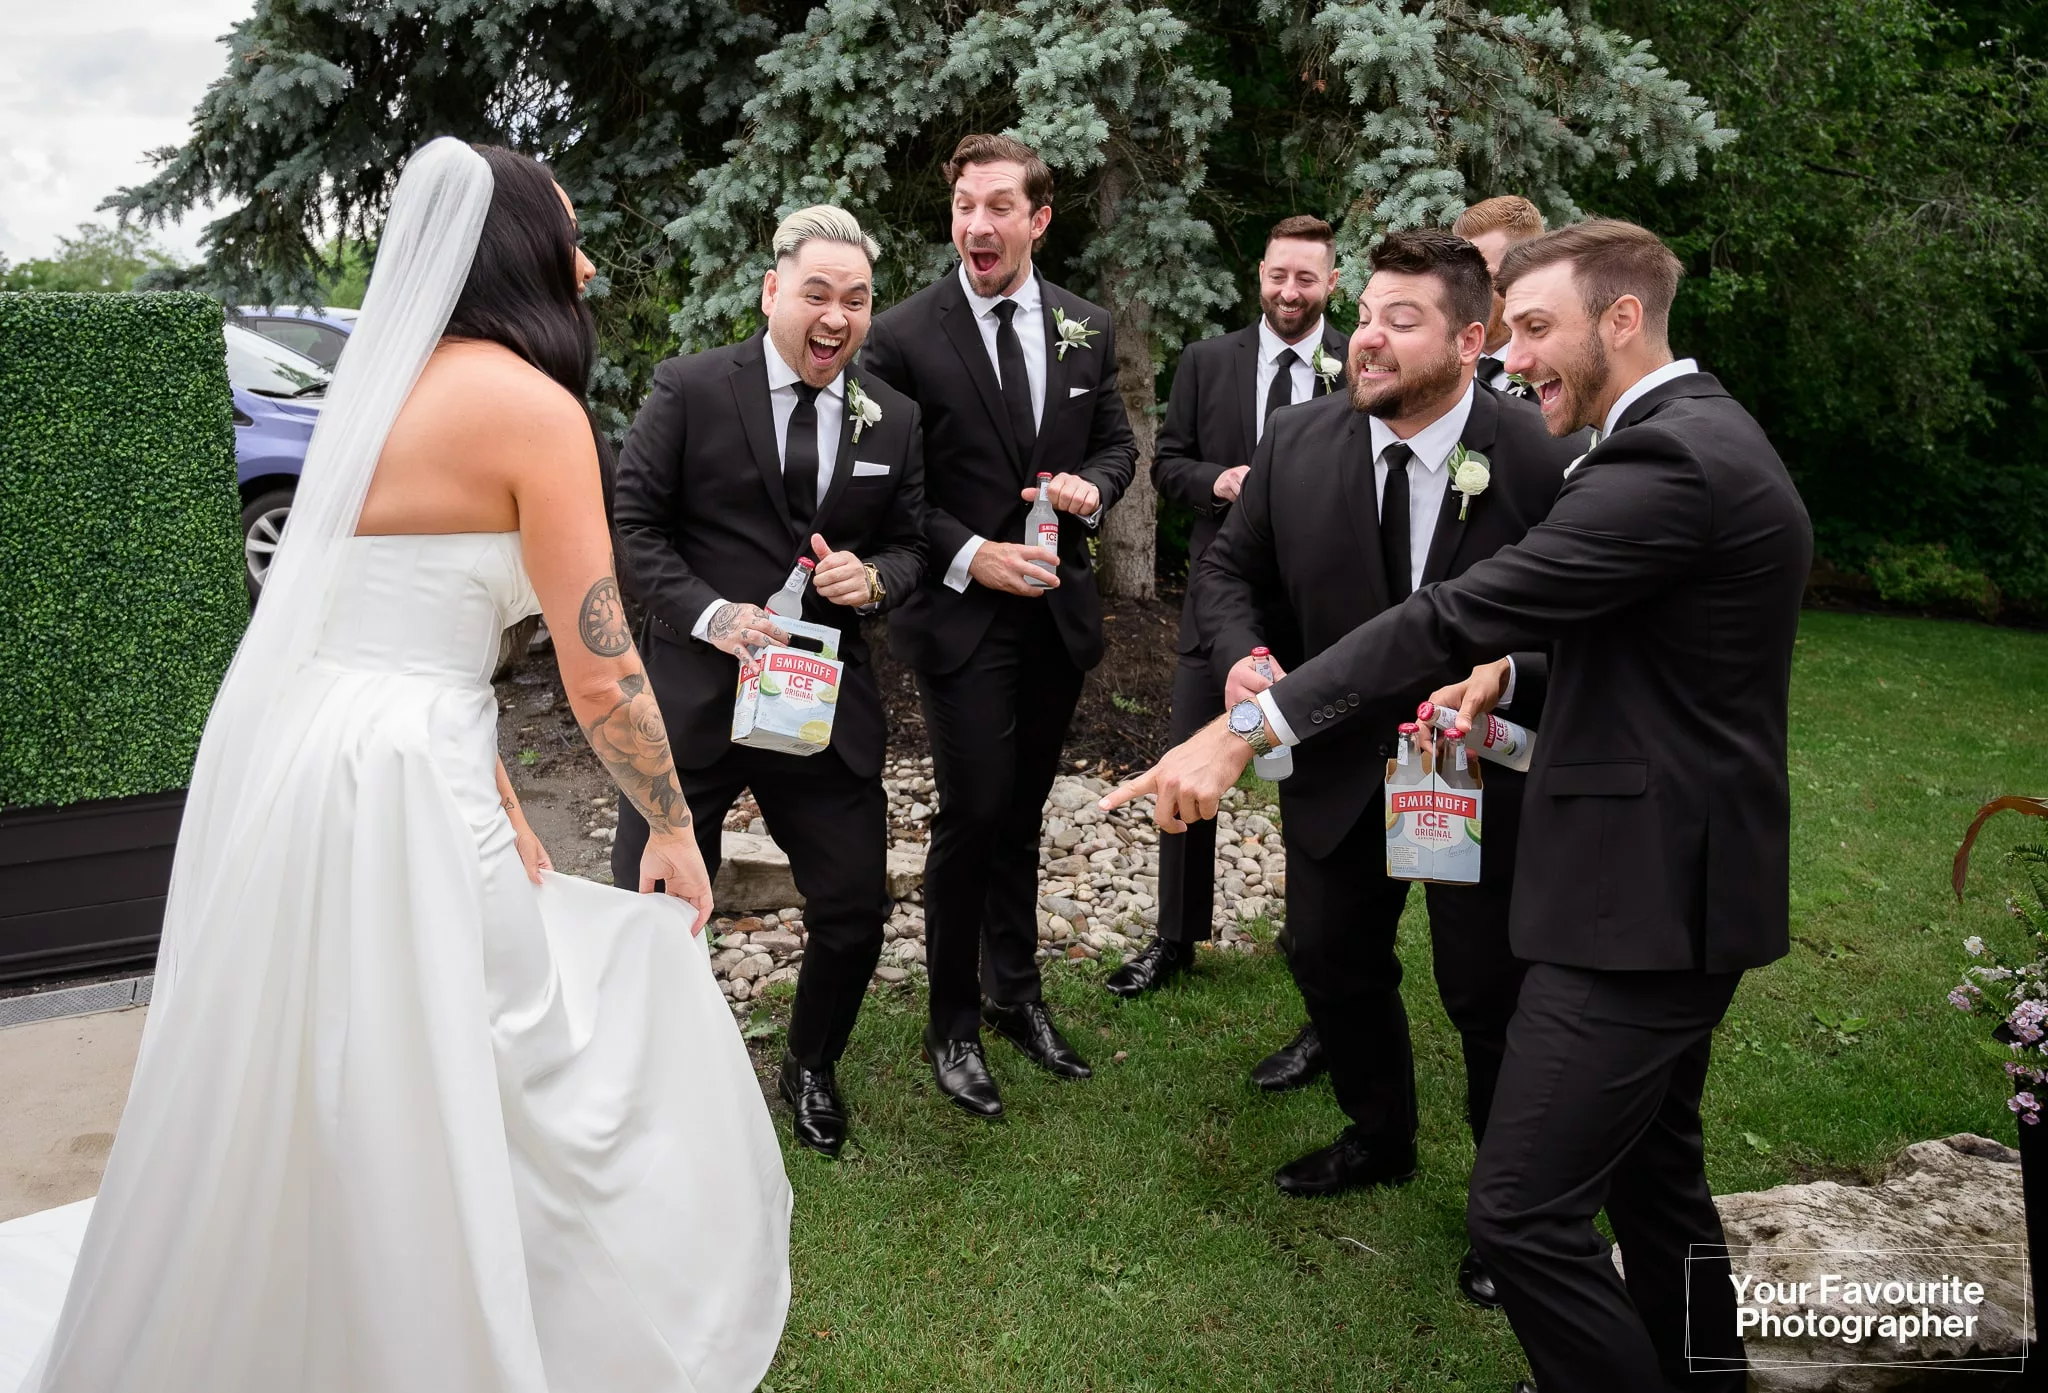 Groomsmen holding Smirnoff Ice bottles reacting to the bride's garter at The Doctor's House wedding venue